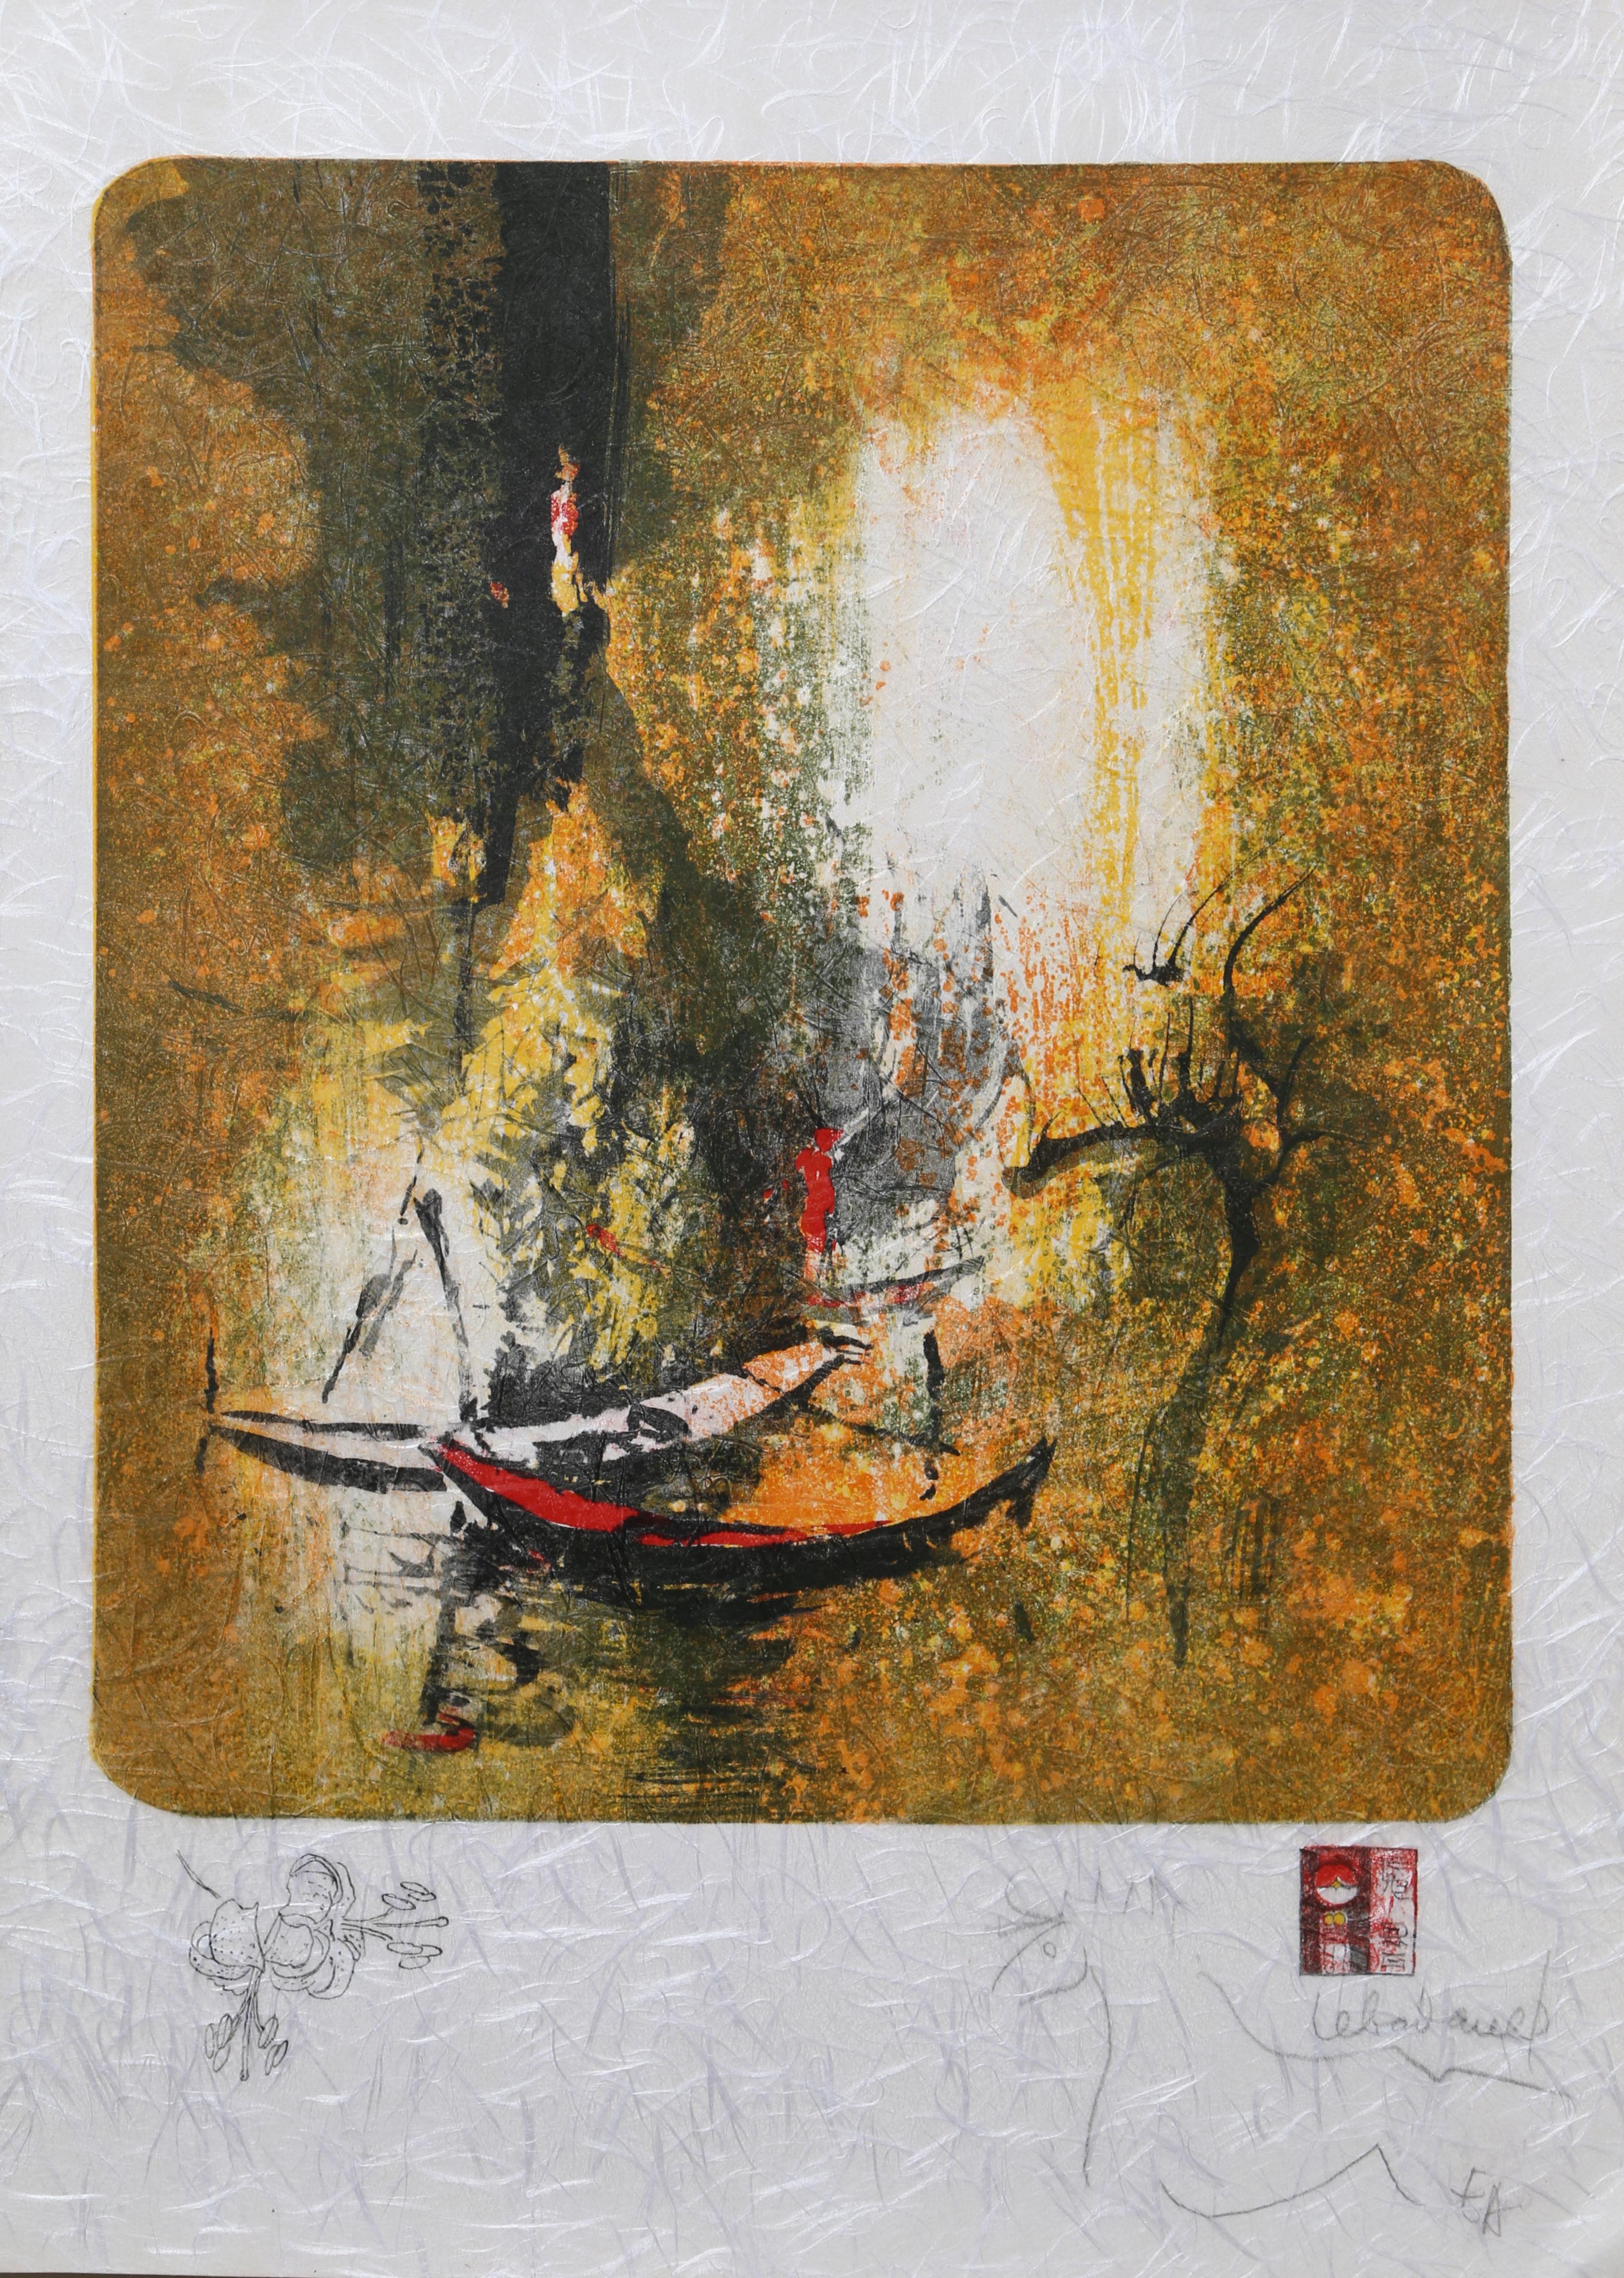 Hoi Lebadang Landscape Print - Red Boats on Orange, Lithograph by Lebadang